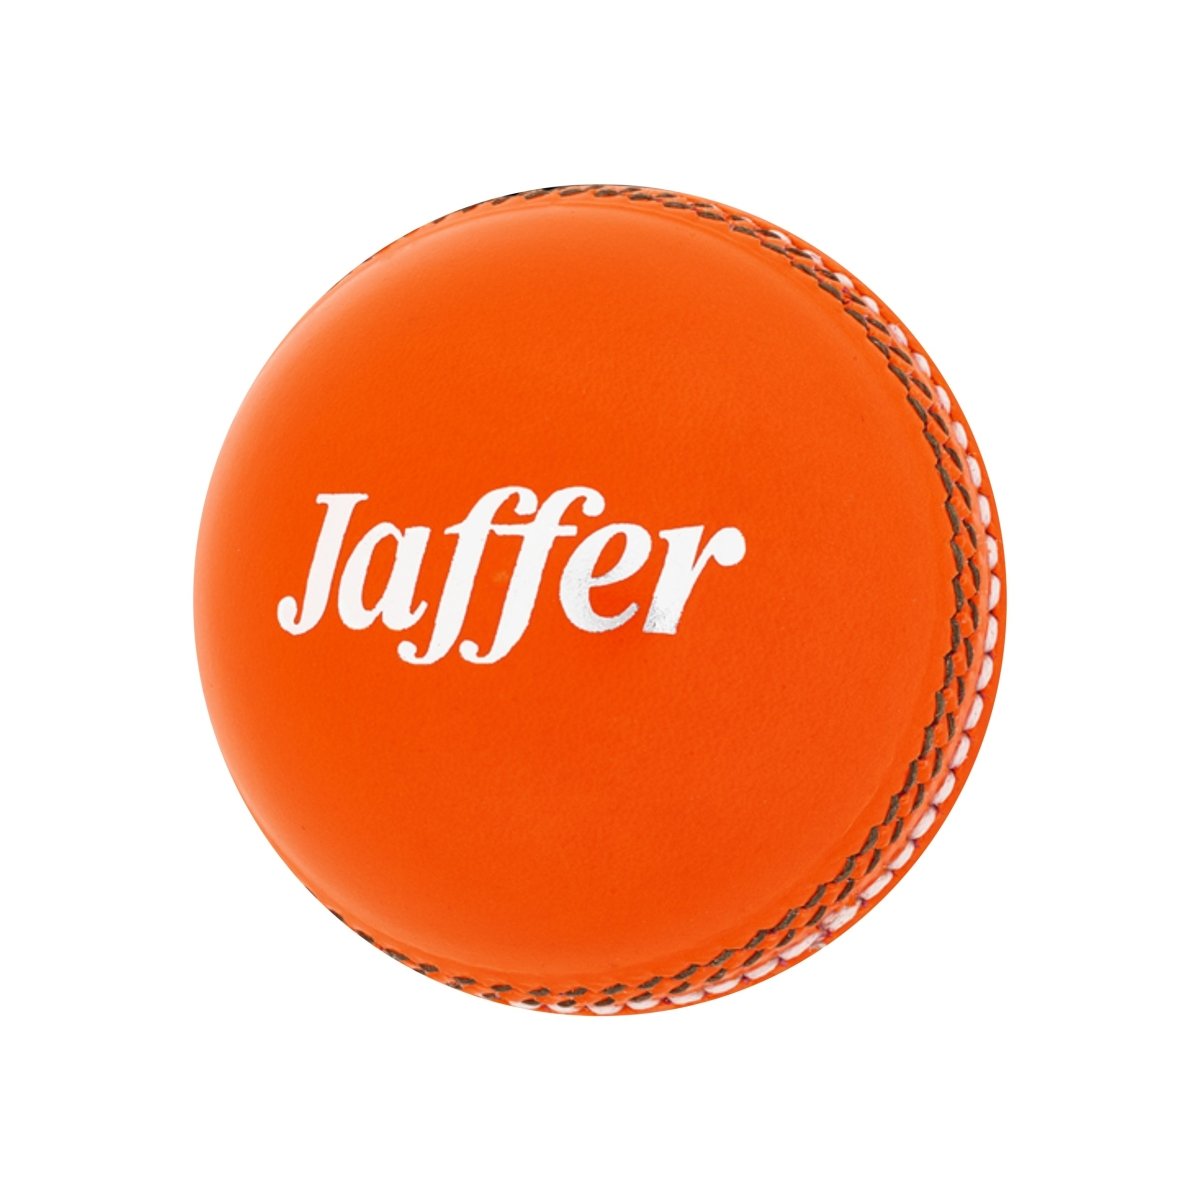 Kookaburra Jaffer Cricket Ball Pack of 12.